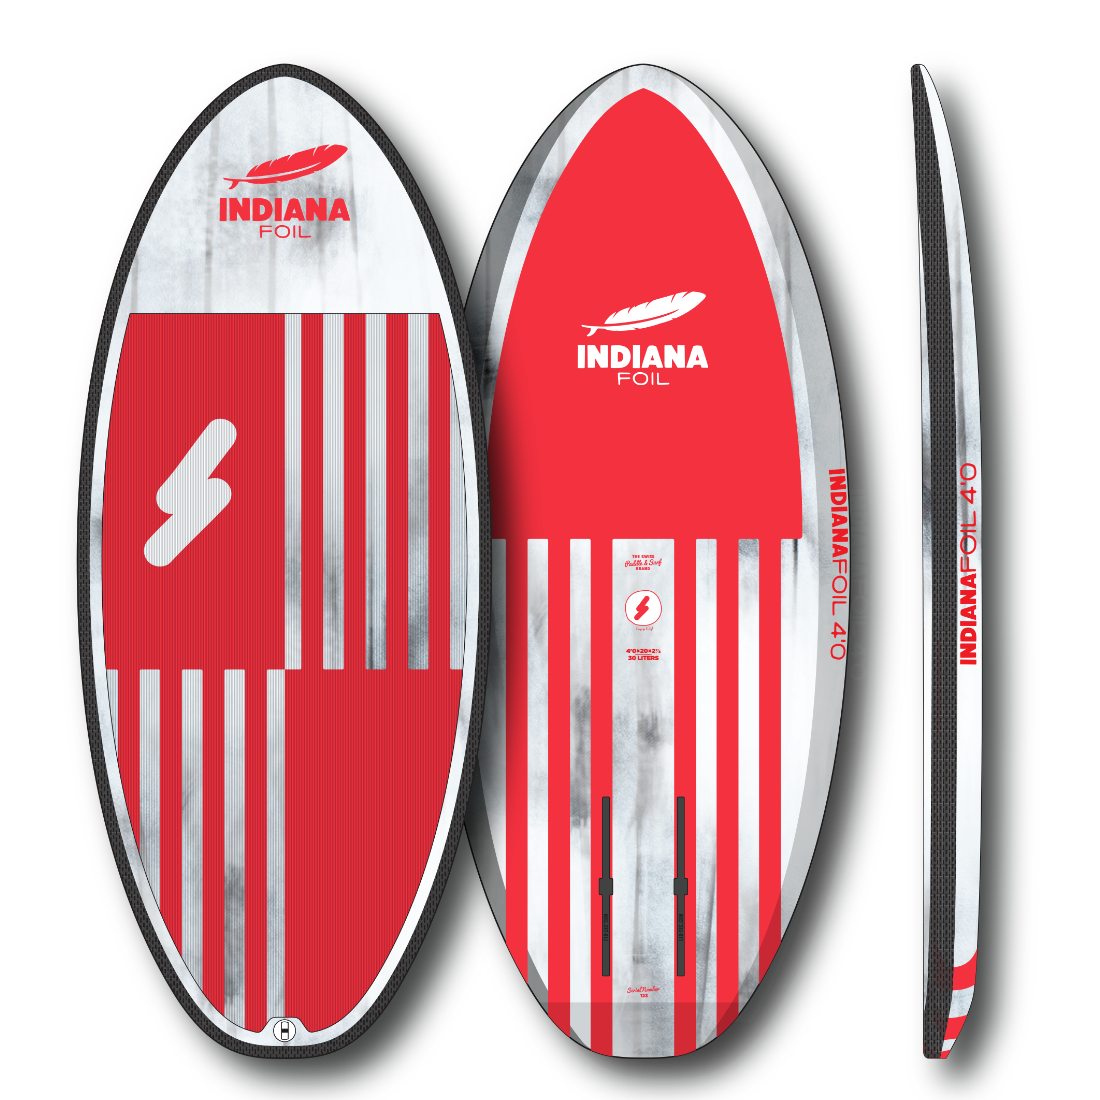 Indiana 4'0 Pump, Surf & Wing 'Le Doigt' Carbon +